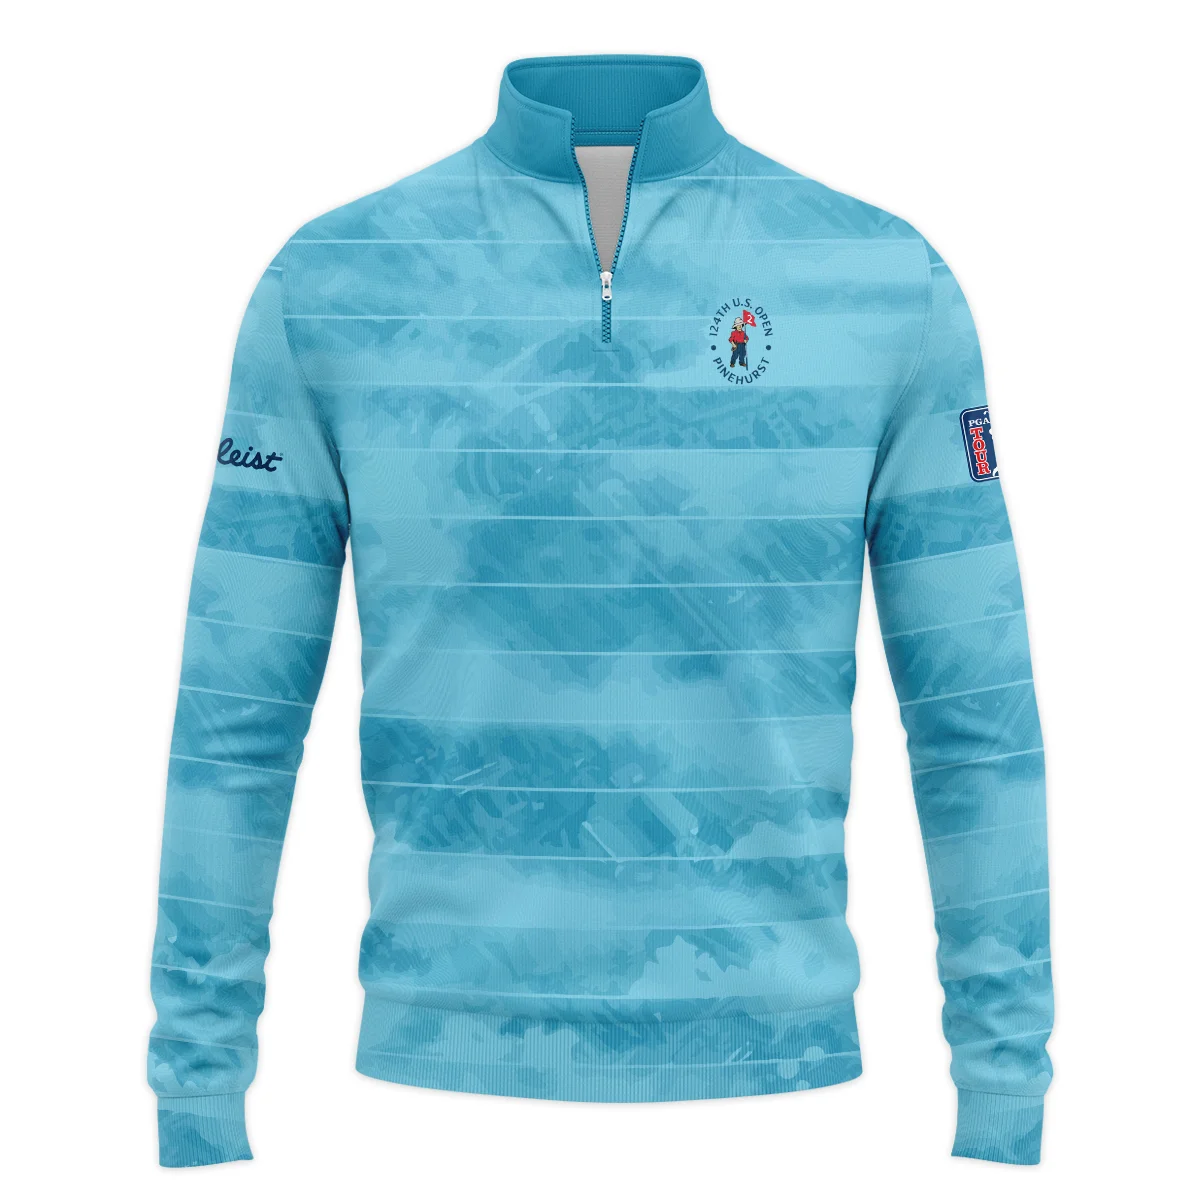 Titleist 124th U.S. Open Pinehurst Blue Abstract Background Line Zipper Hoodie Shirt Style Classic